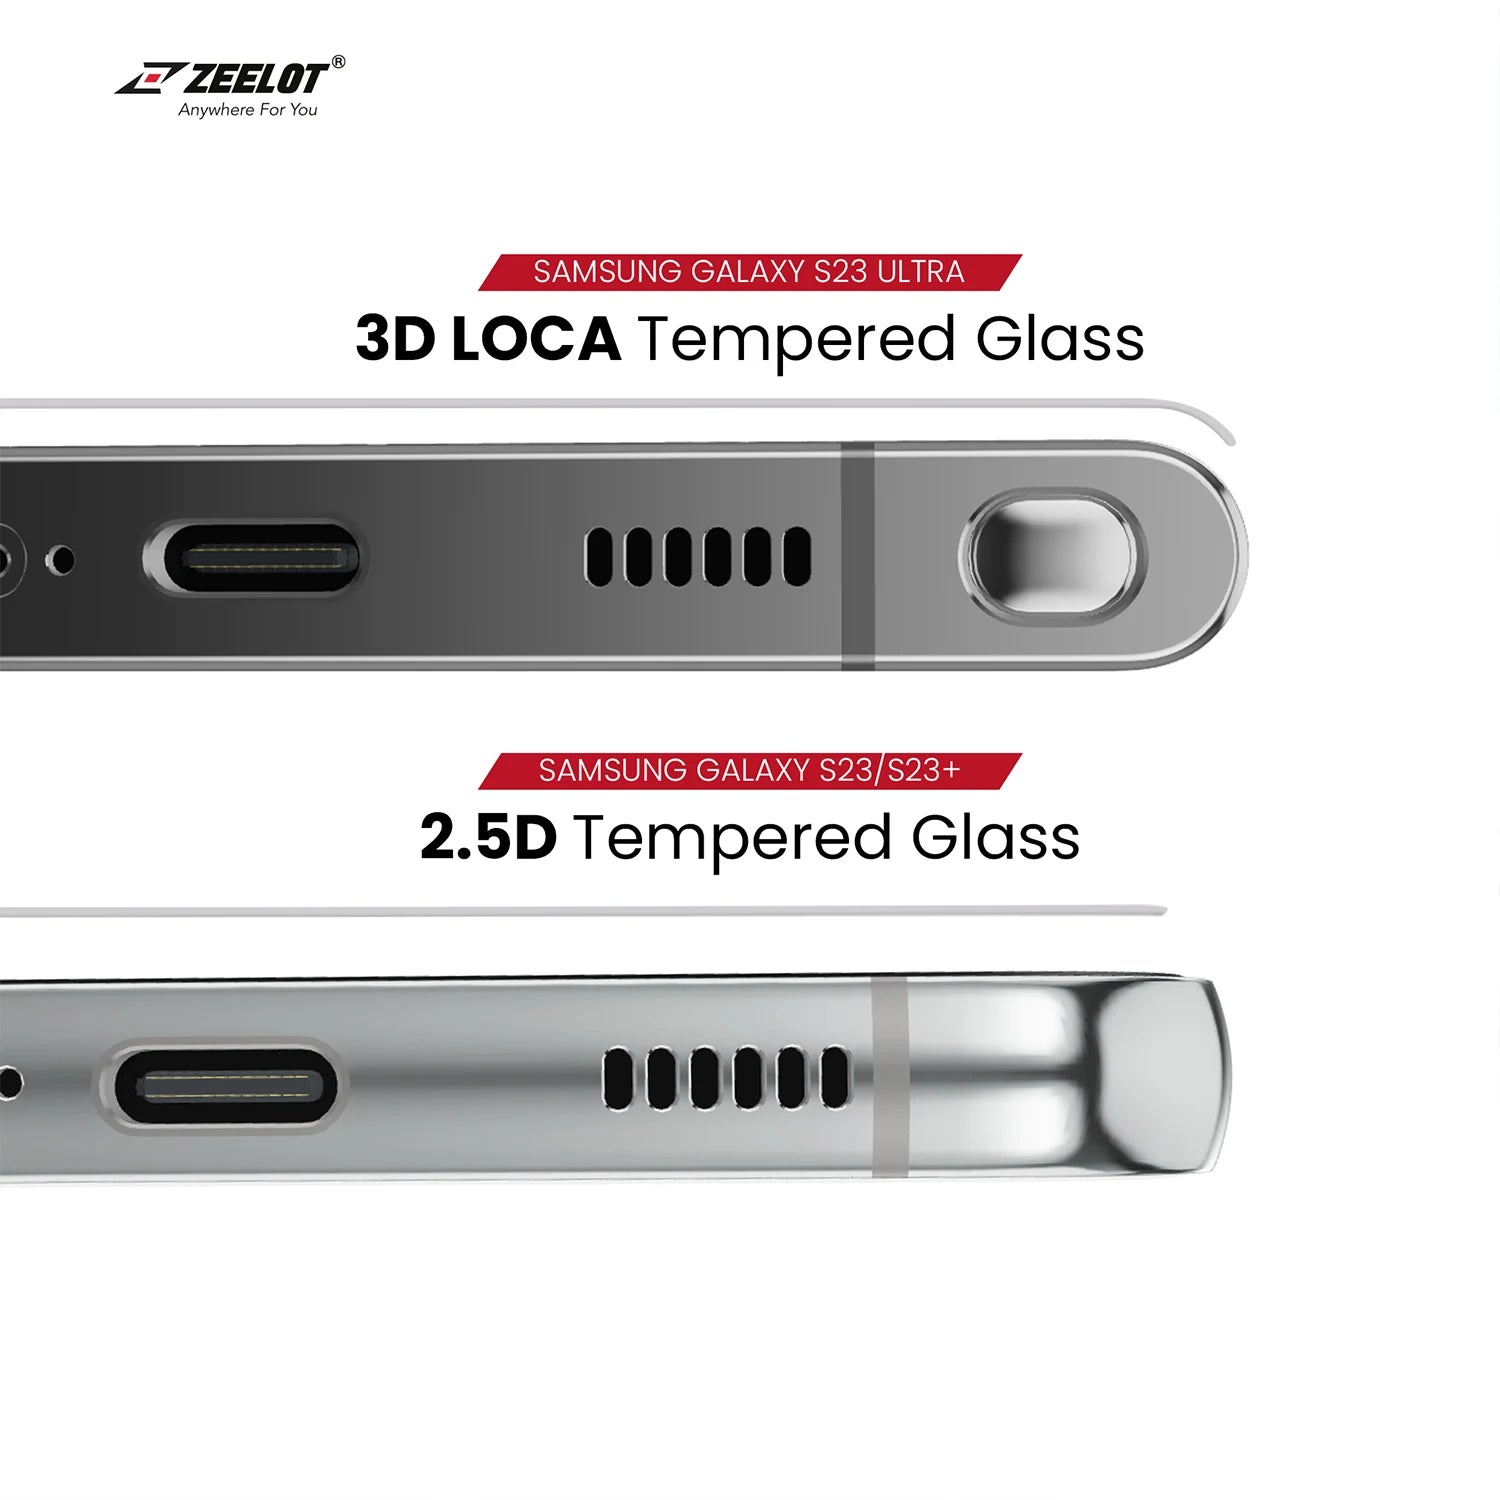 ZEELOT SOLIDsleek 3D LOCA Tempered Glass Screen Protector for